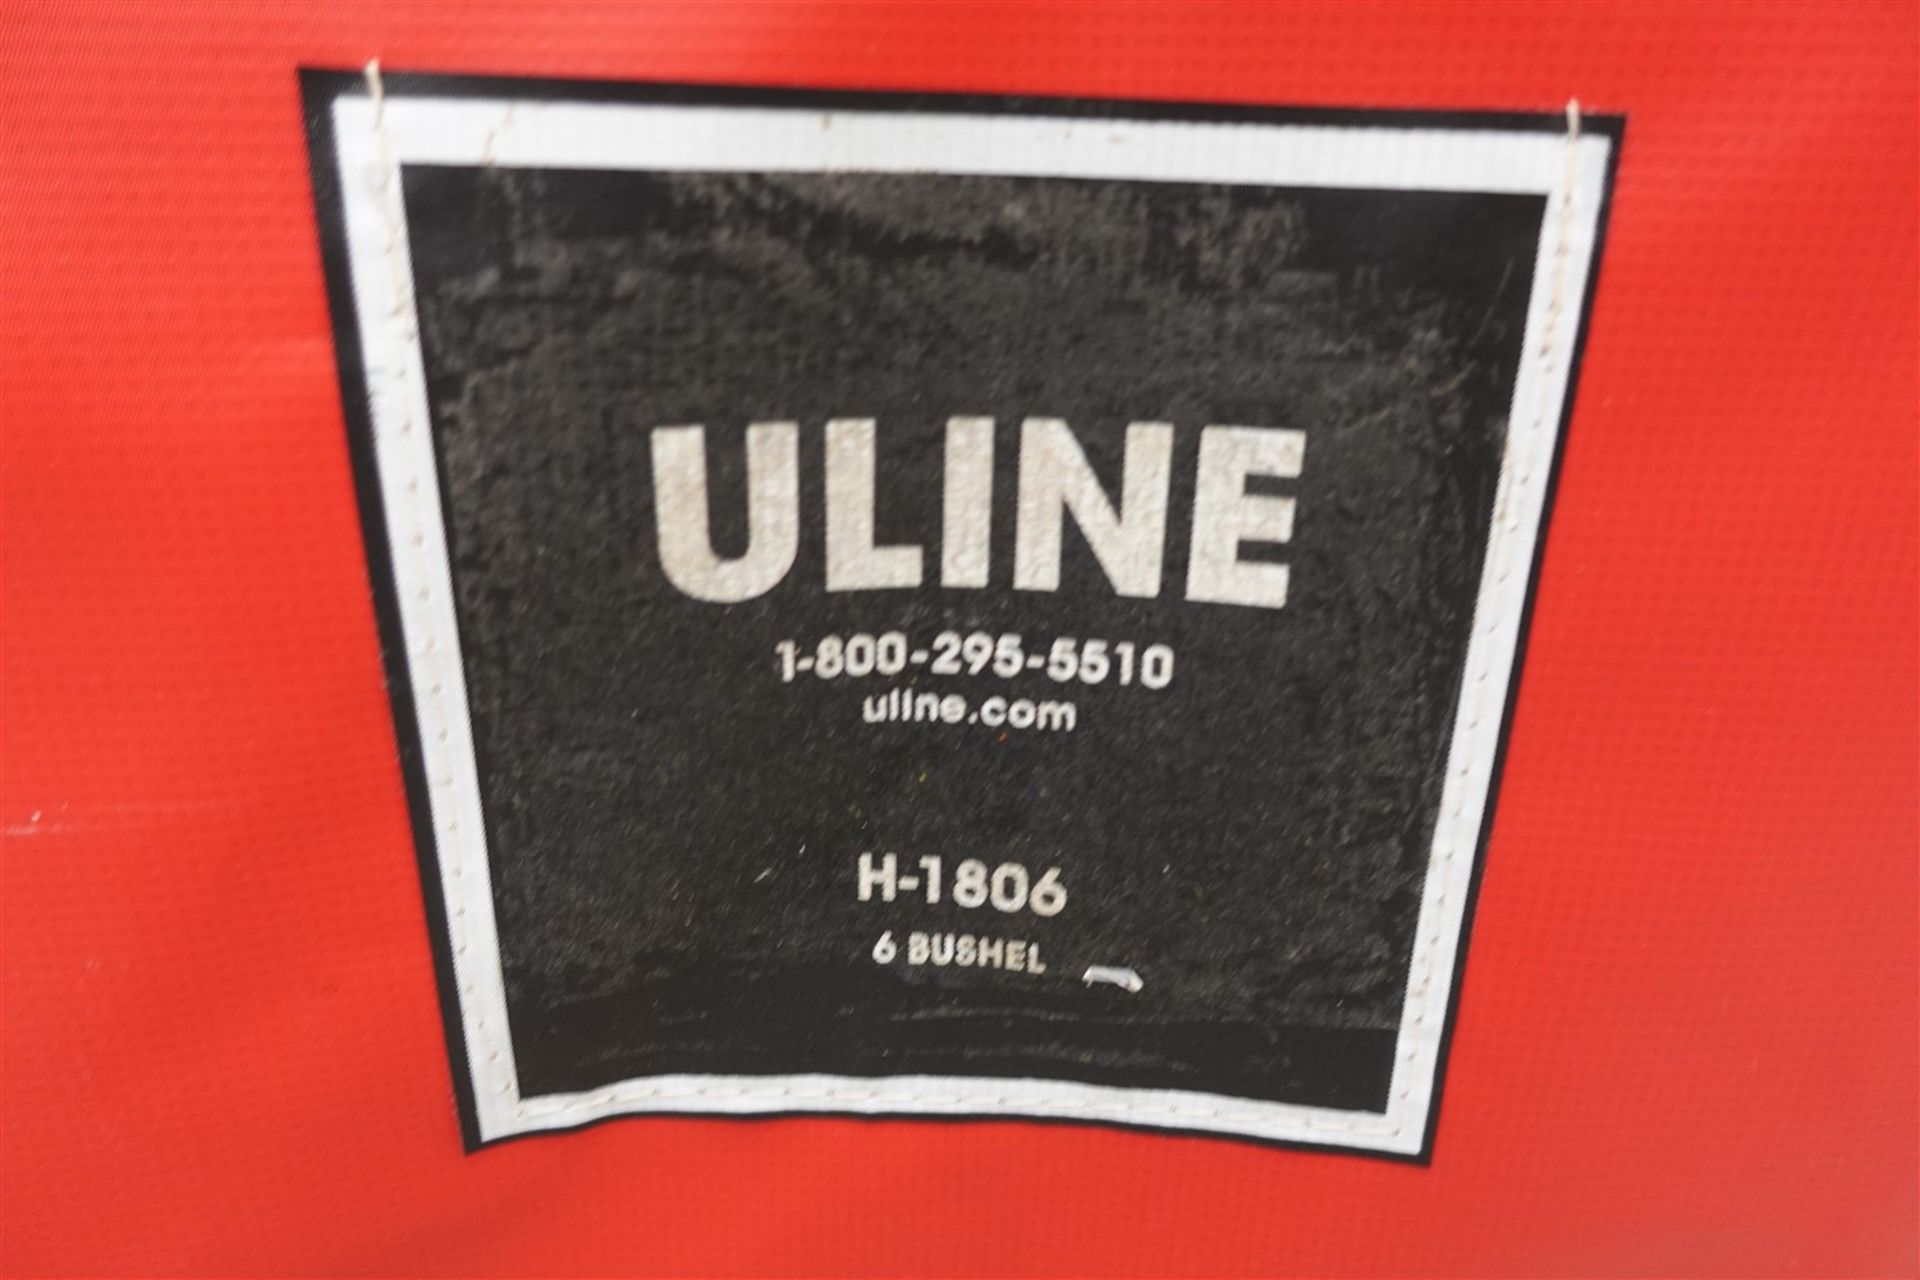 ULINE RED VINYL BASKET TRUCK, 6 BUSHEL, 20 IN. X 30 IN. MOD. H-1806 - Image 2 of 2